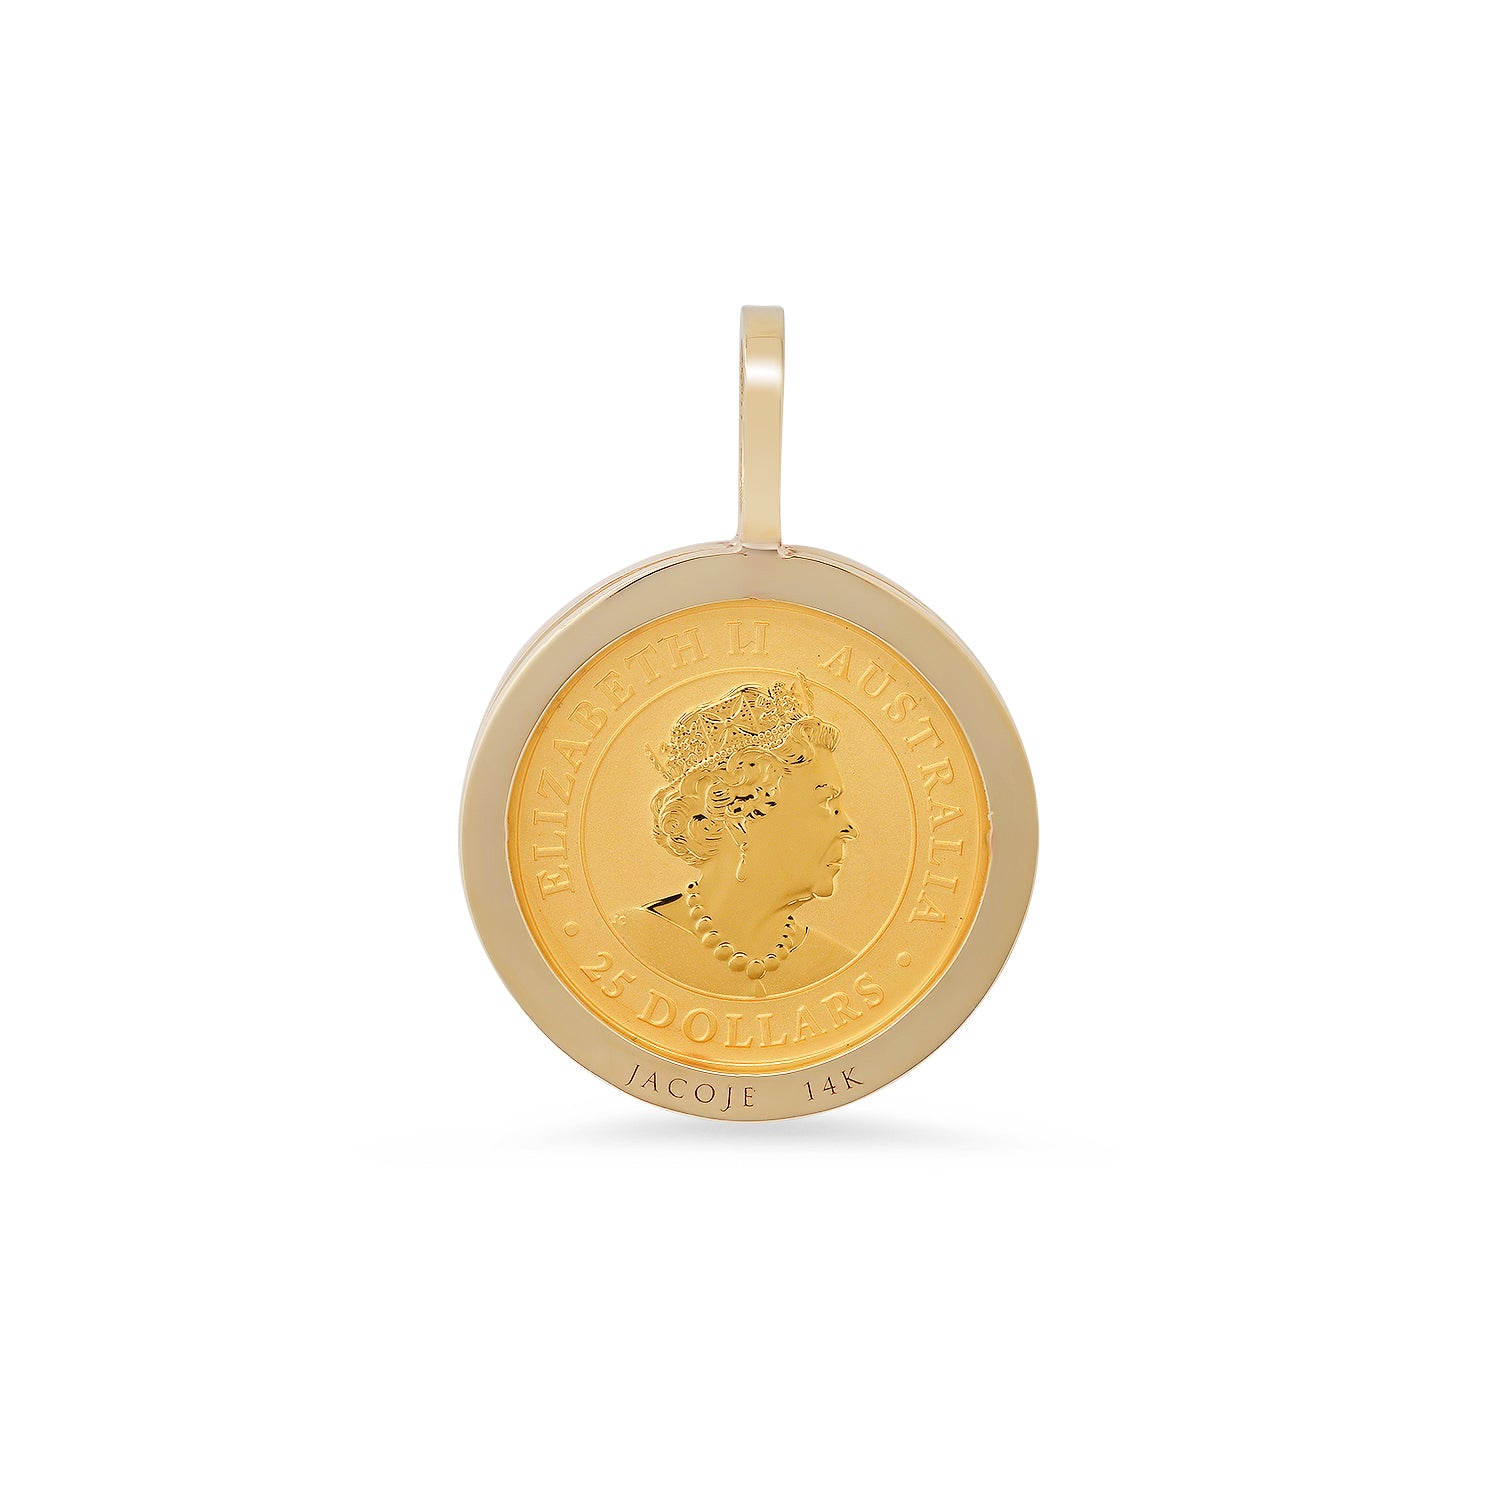 1/4 oz Kangaroo Gold Coin (Plain)